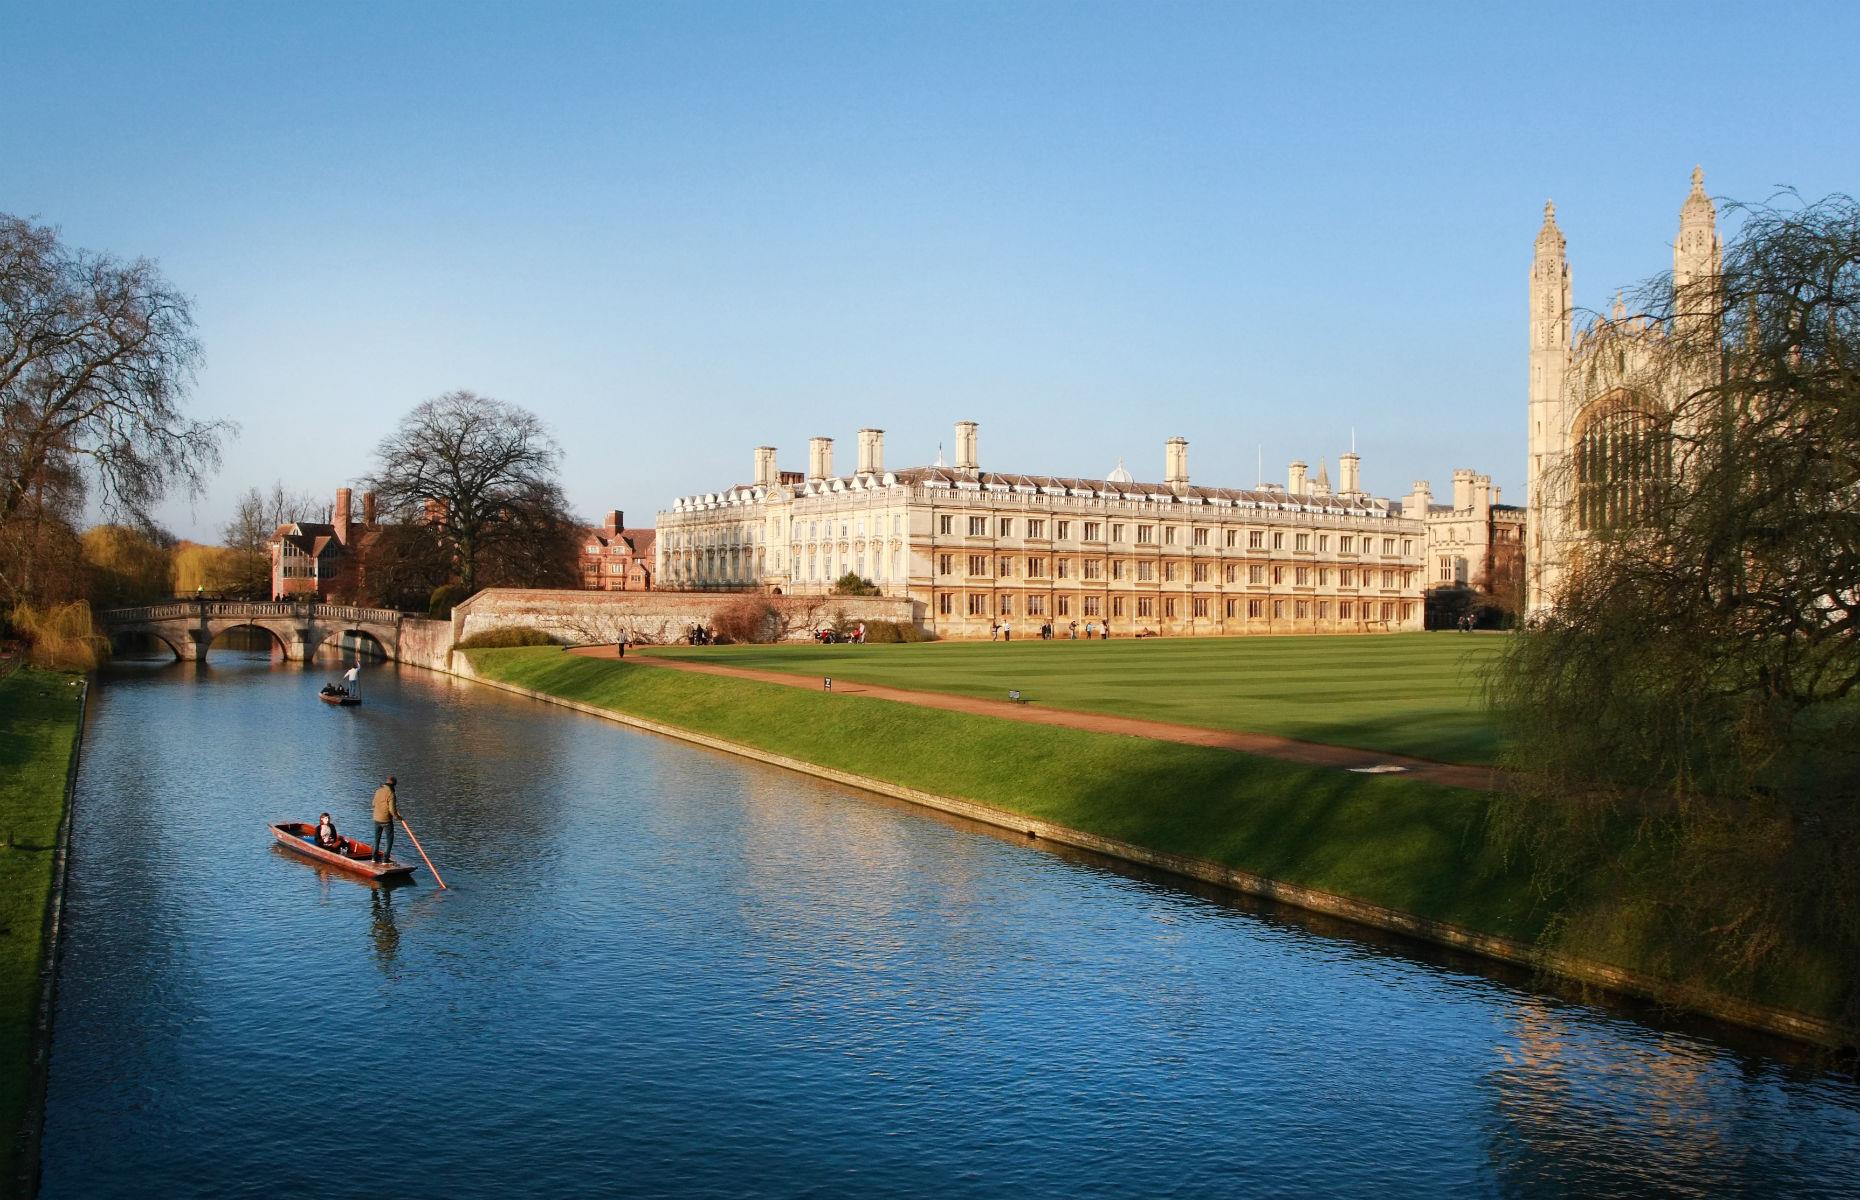 4th – University of Cambridge, UK